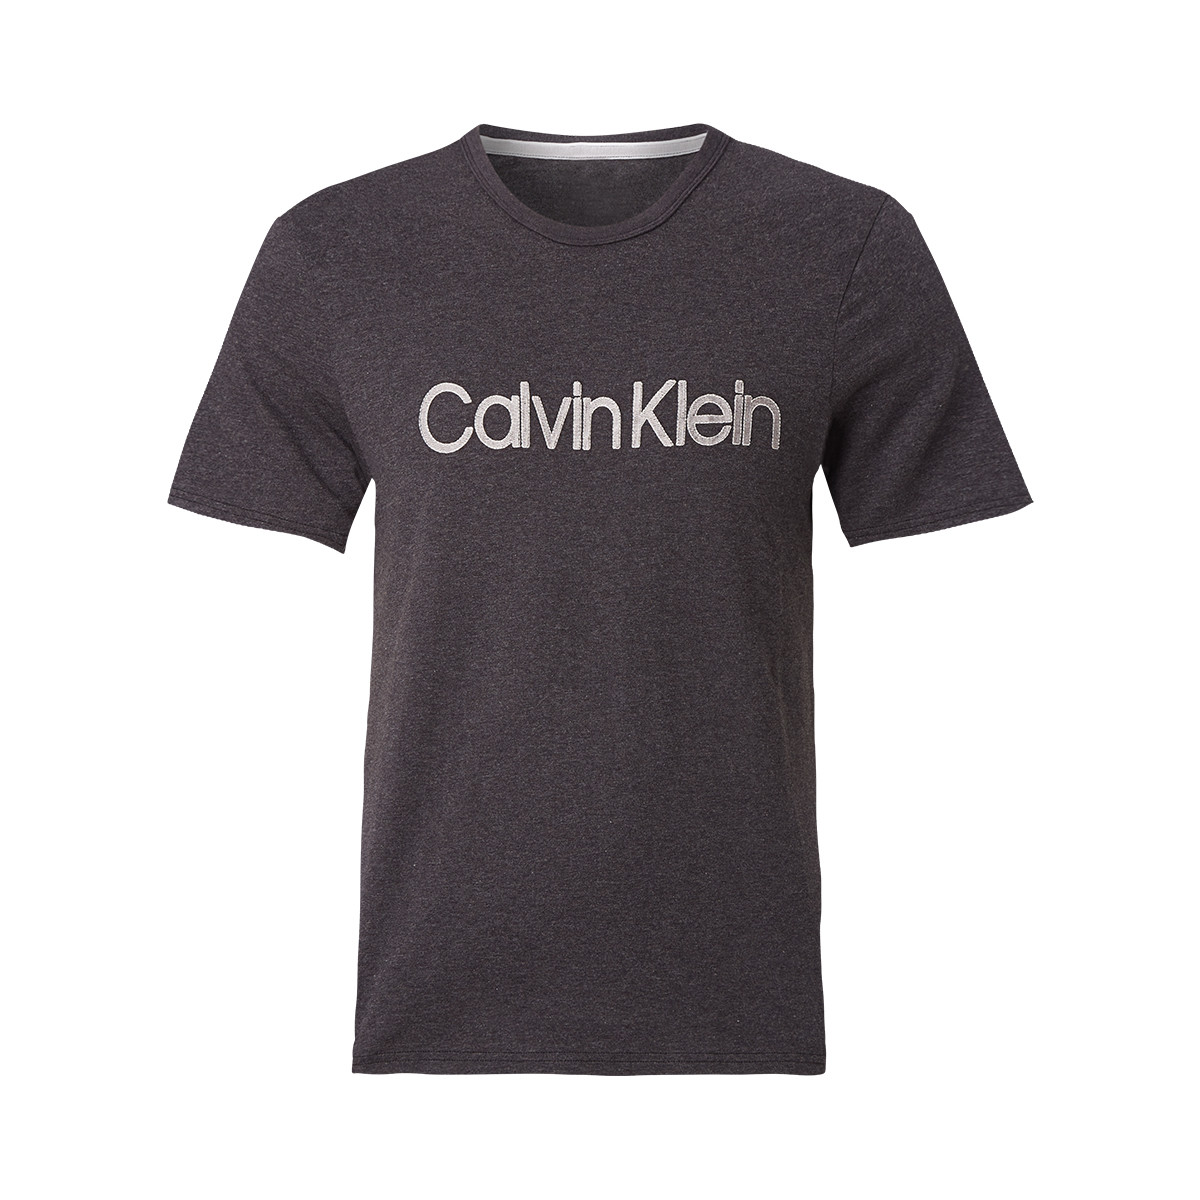 Calvin Klein T-shirt S Pgs, Farve: Heather, Størrelse: S, Dame